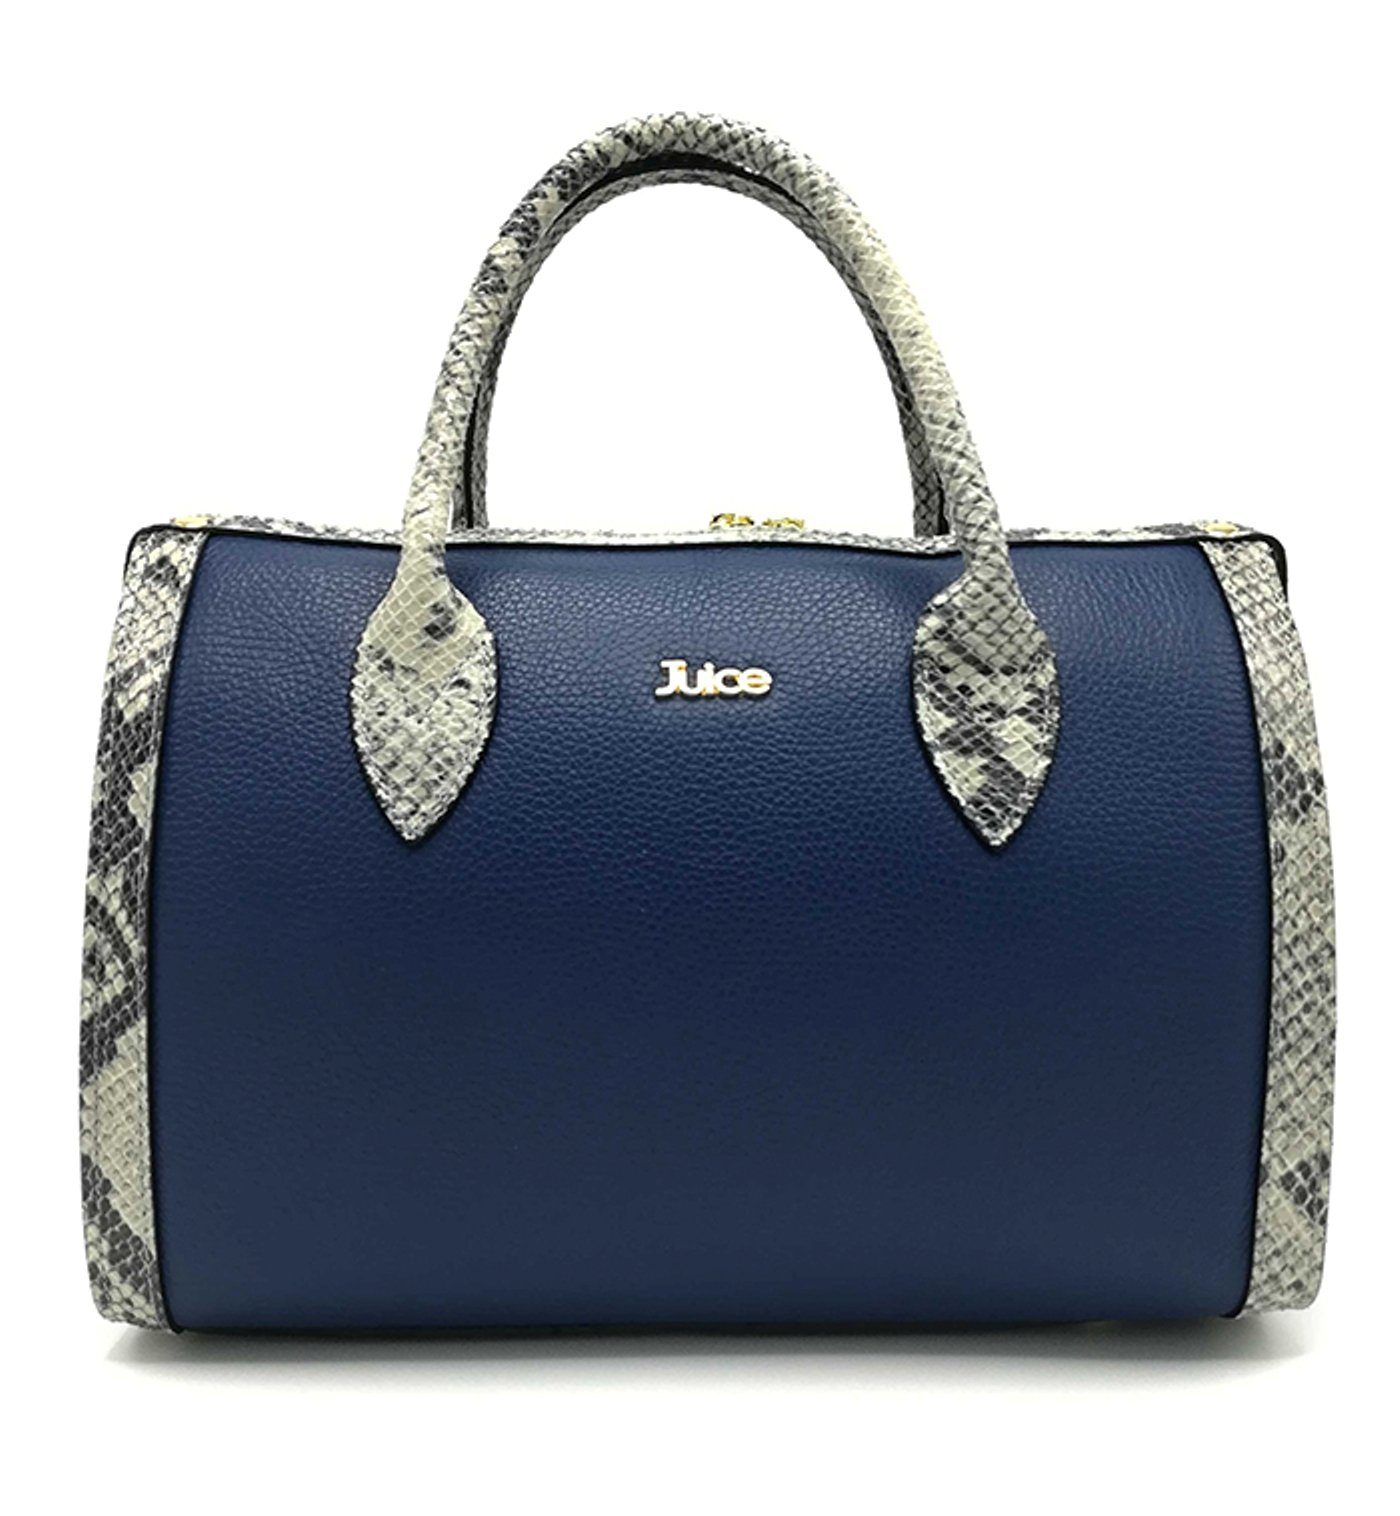 Handtasche in Ava Jackson Leder made blau-beige echtes & Italy VIVIANA, Company